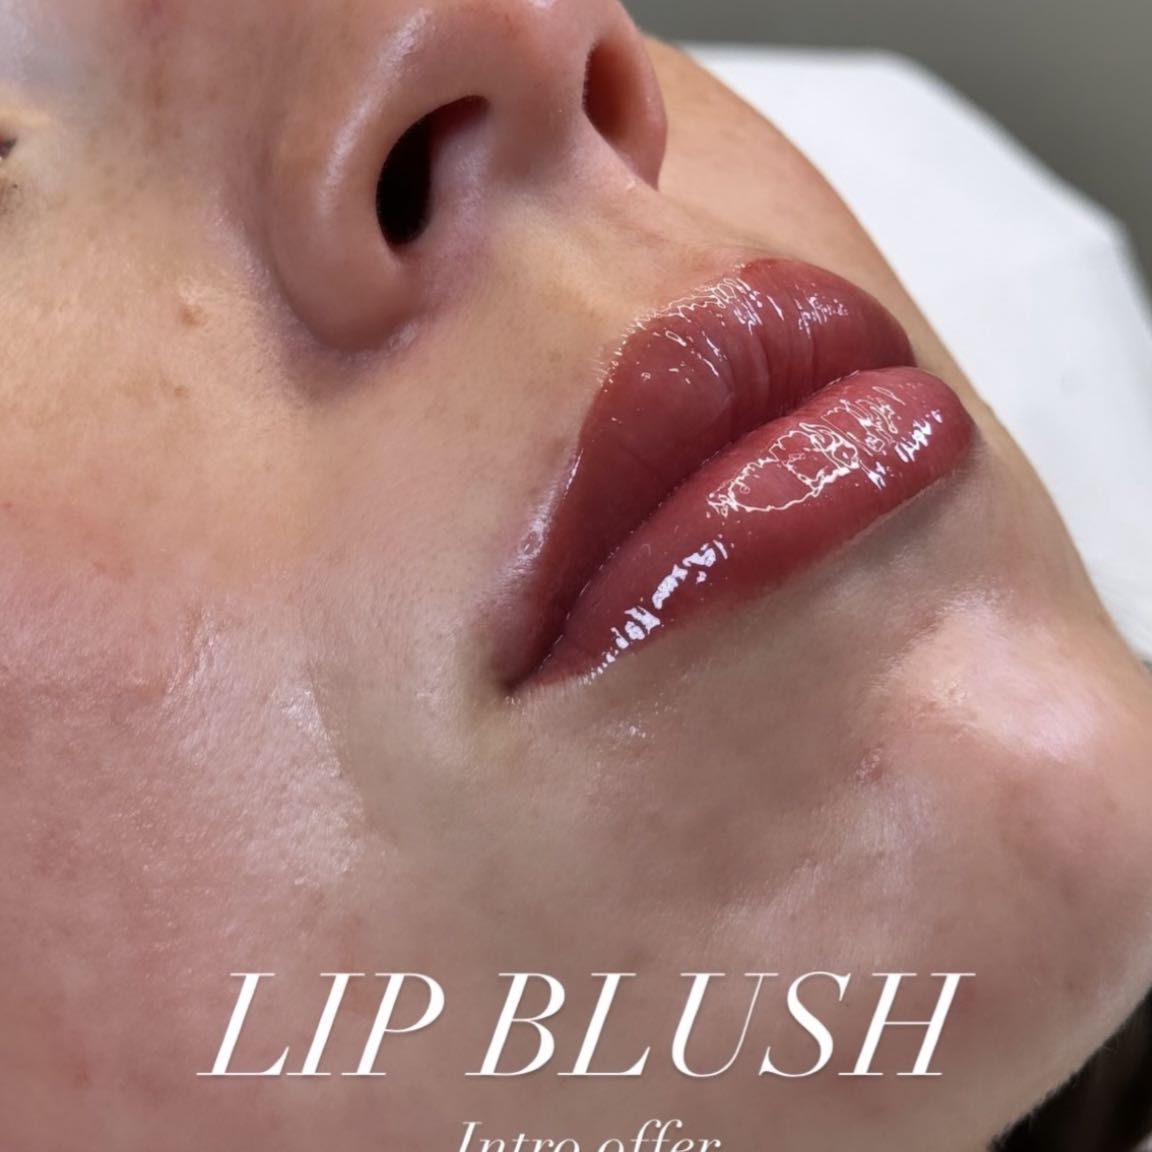 Lip blush (introductory price) portfolio